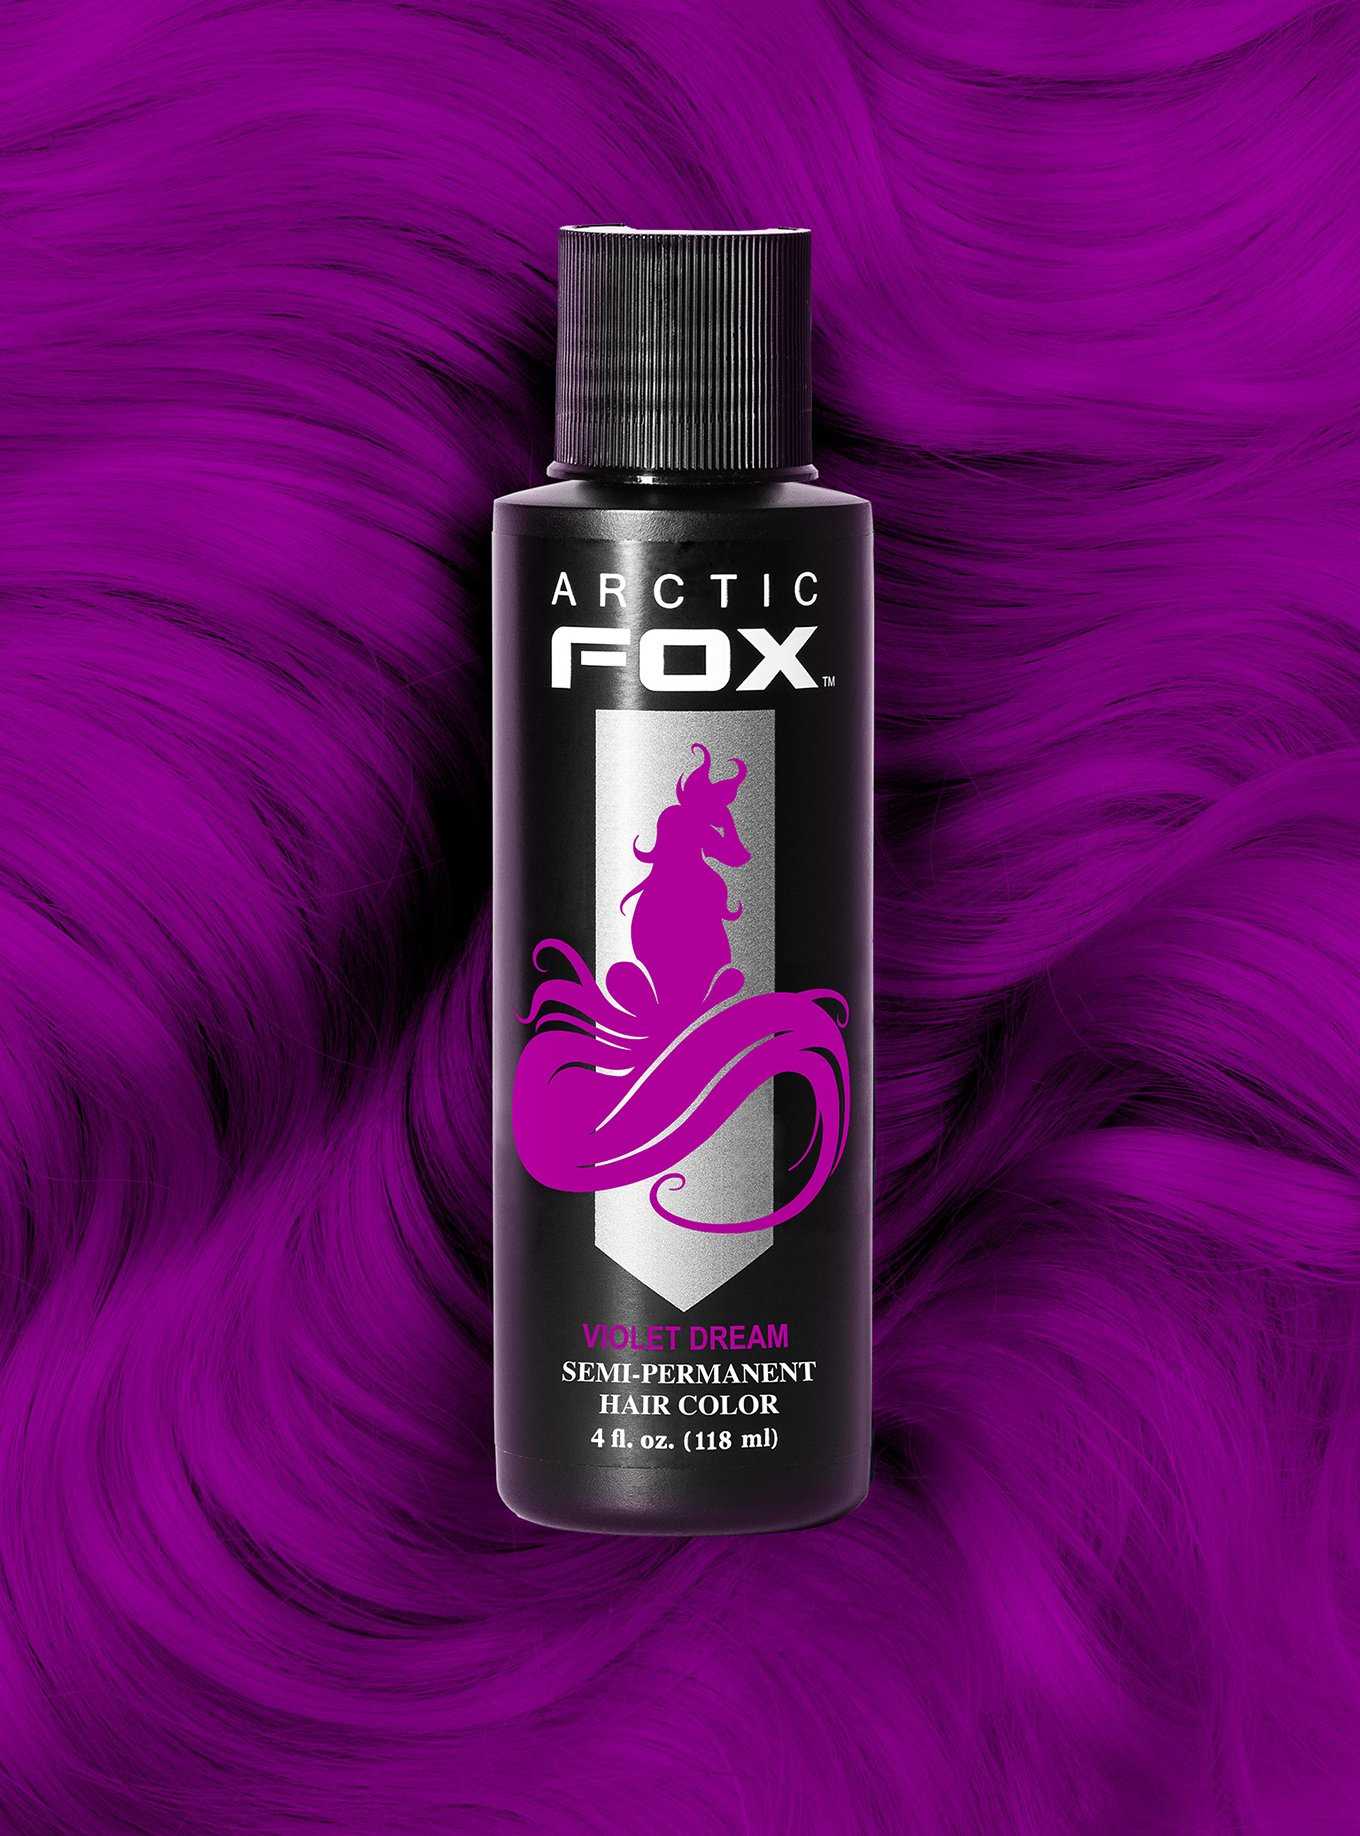 Arctic Fox Semi-Permanent Virgin Pink Hair Dye